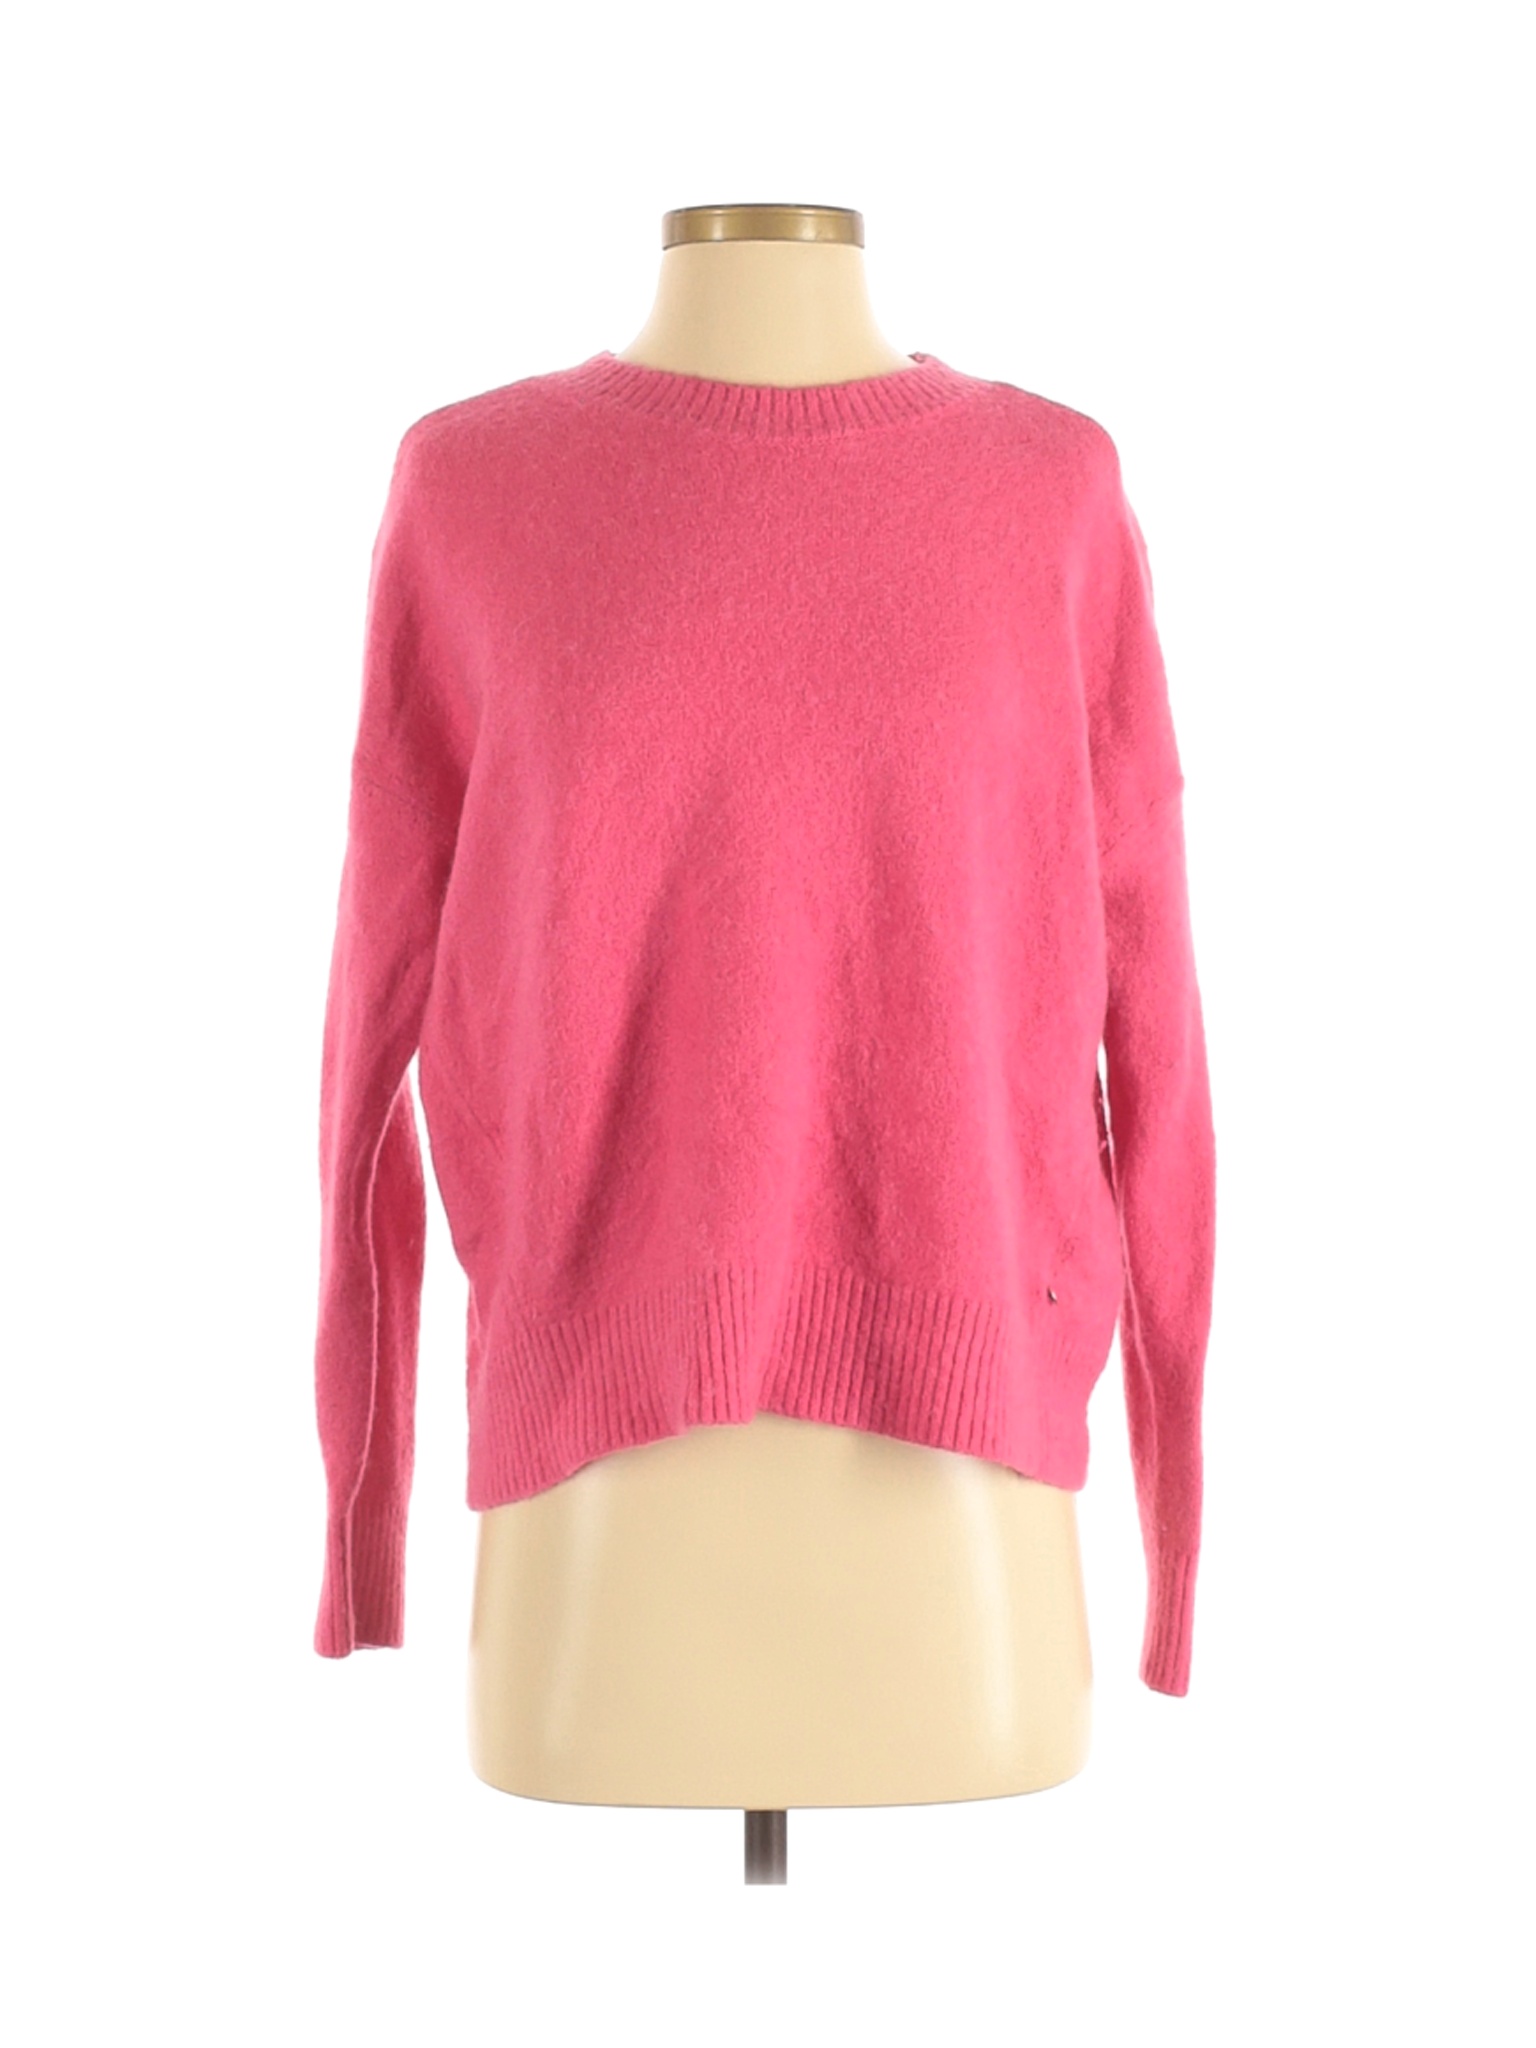 Scotch & Soda Women Pink Pullover Sweater XS | eBay